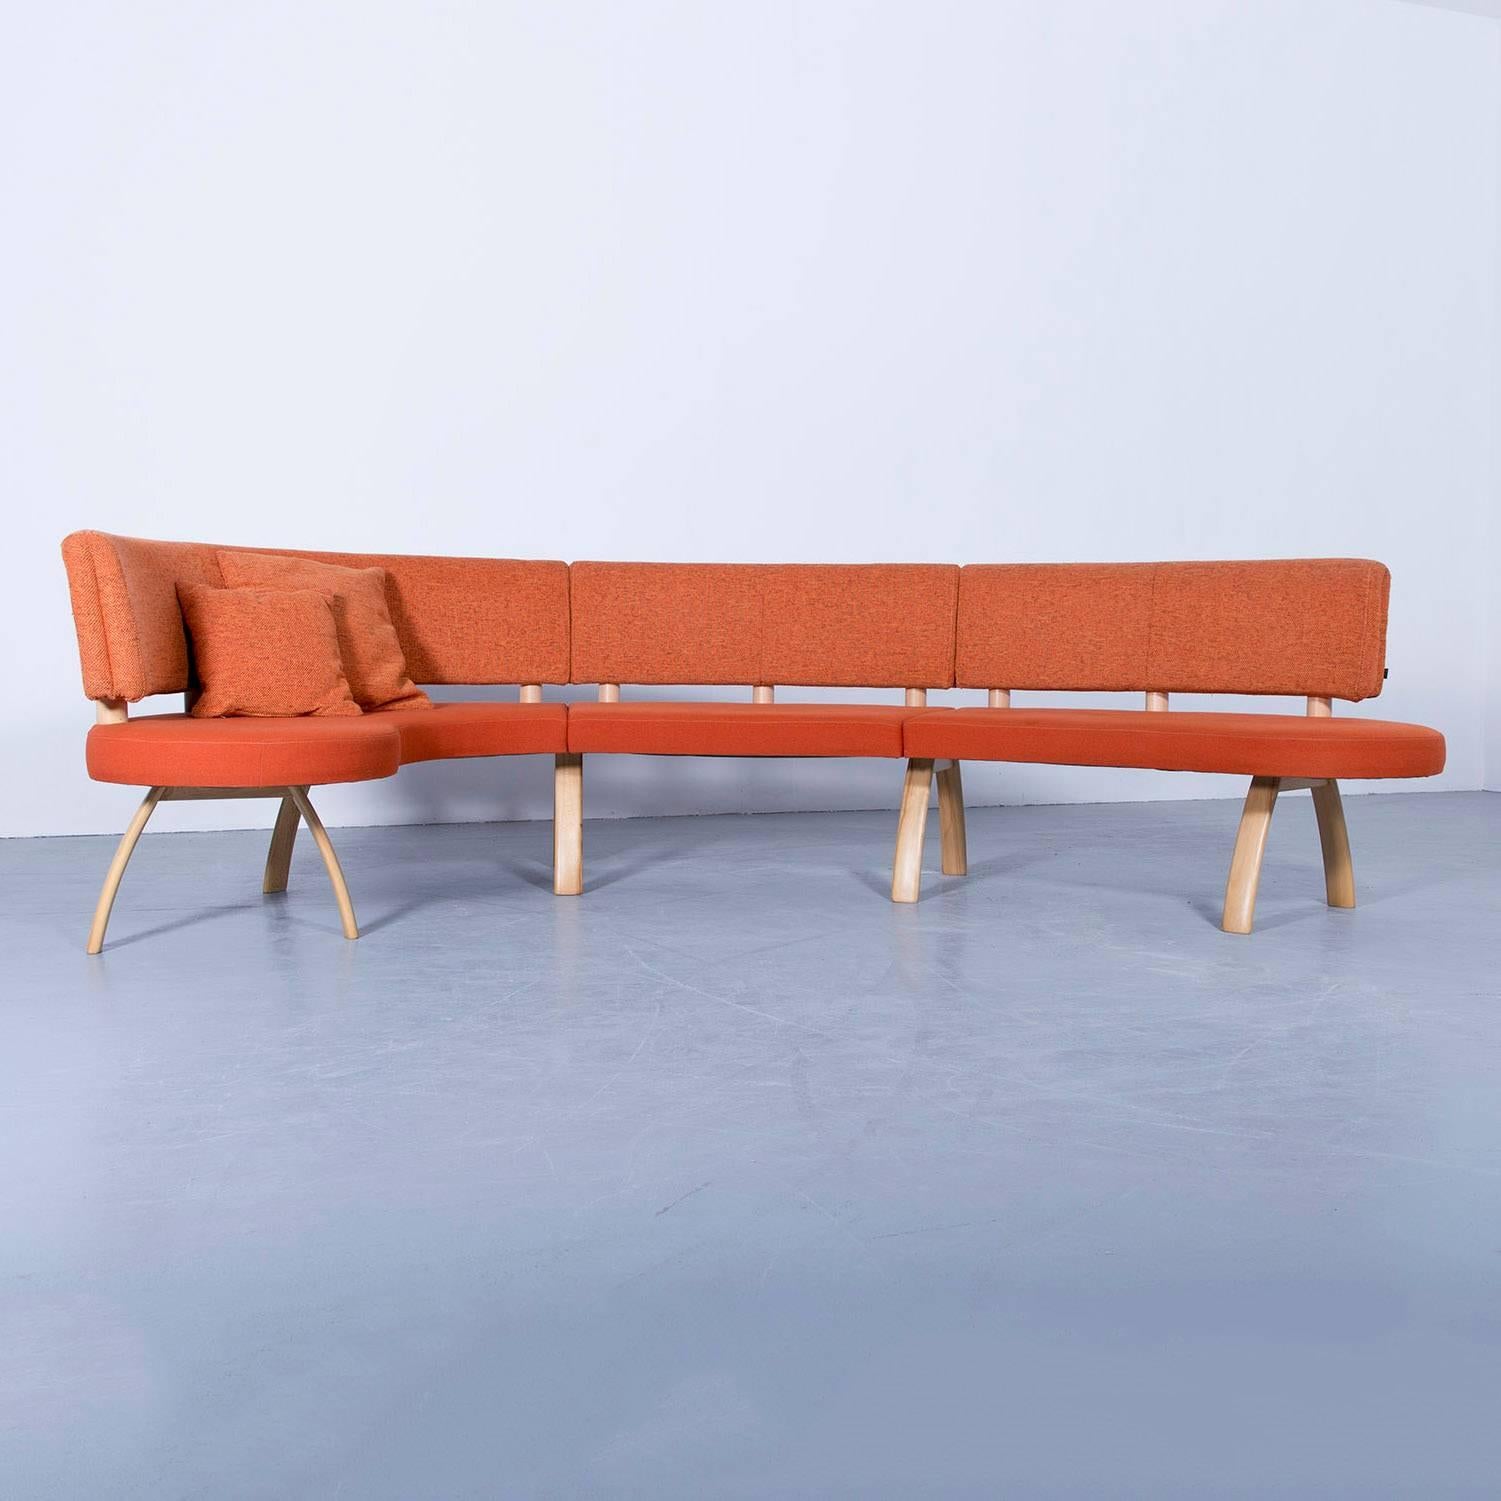 K+W SiLaxx Kitchen Set Bench Chair Table Couch Sofa Orange Modern